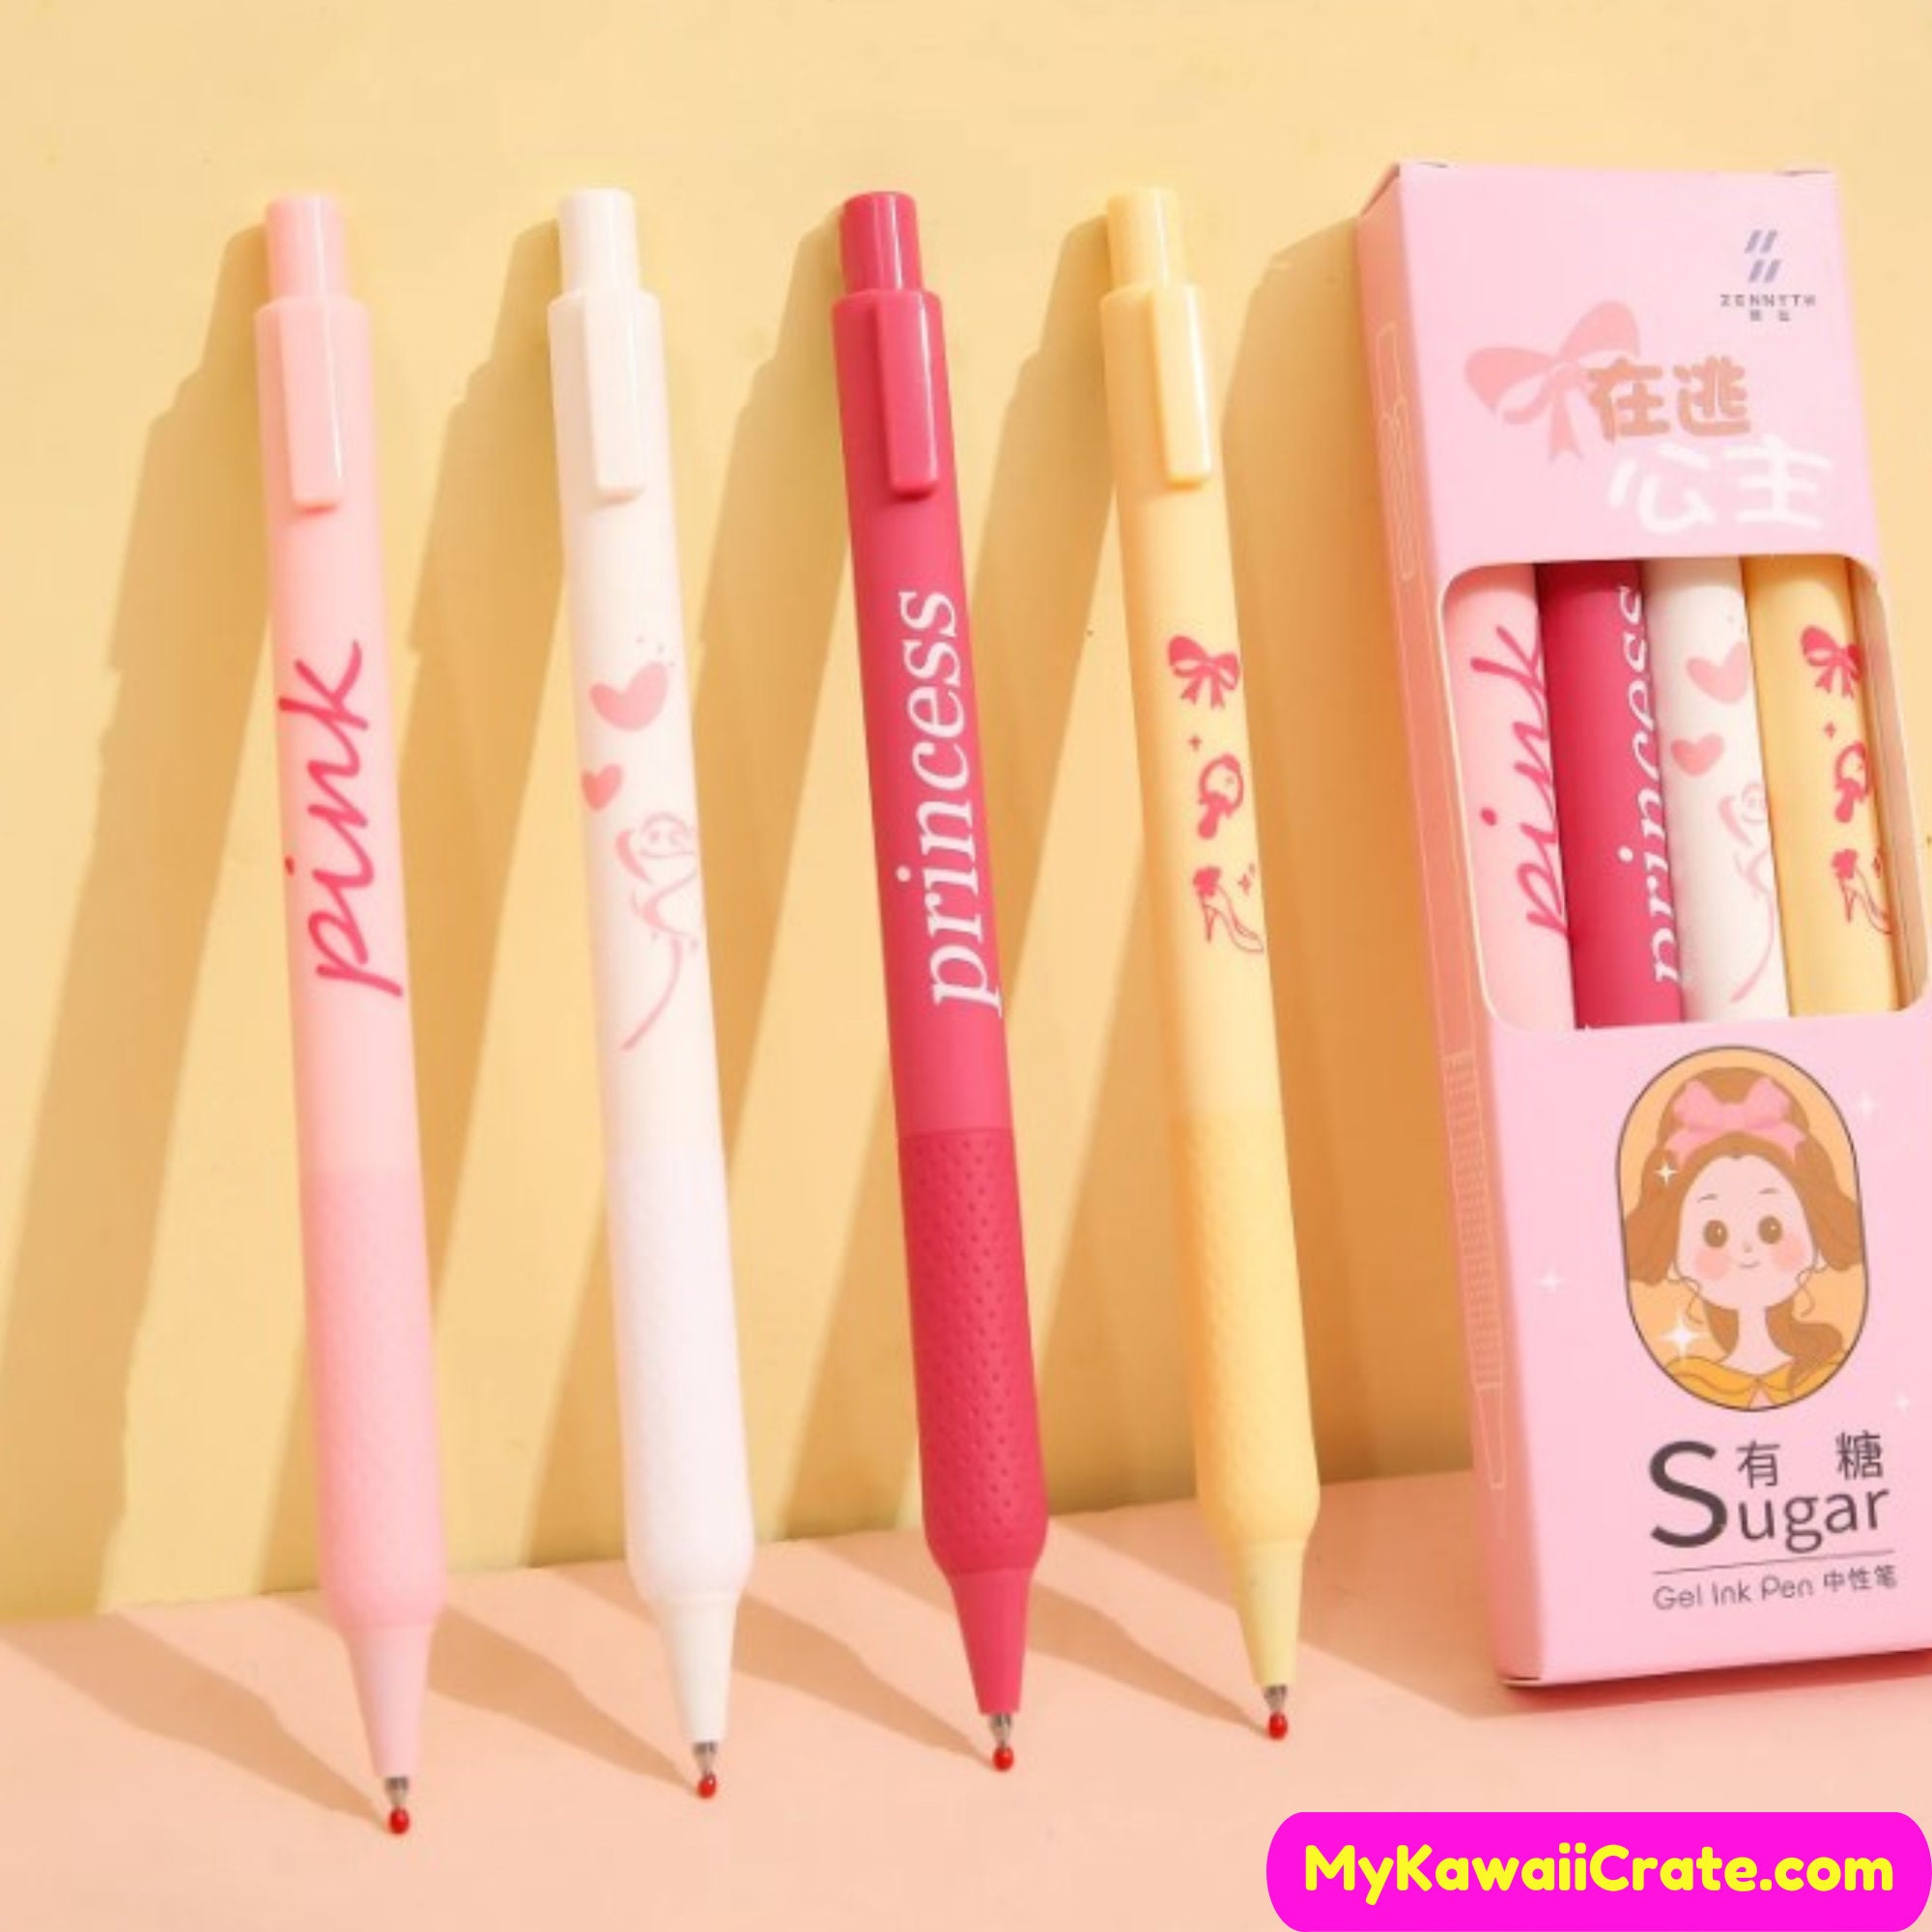 Disney Princess Childrens Glitter Gel Pen Set New Sealed Moana